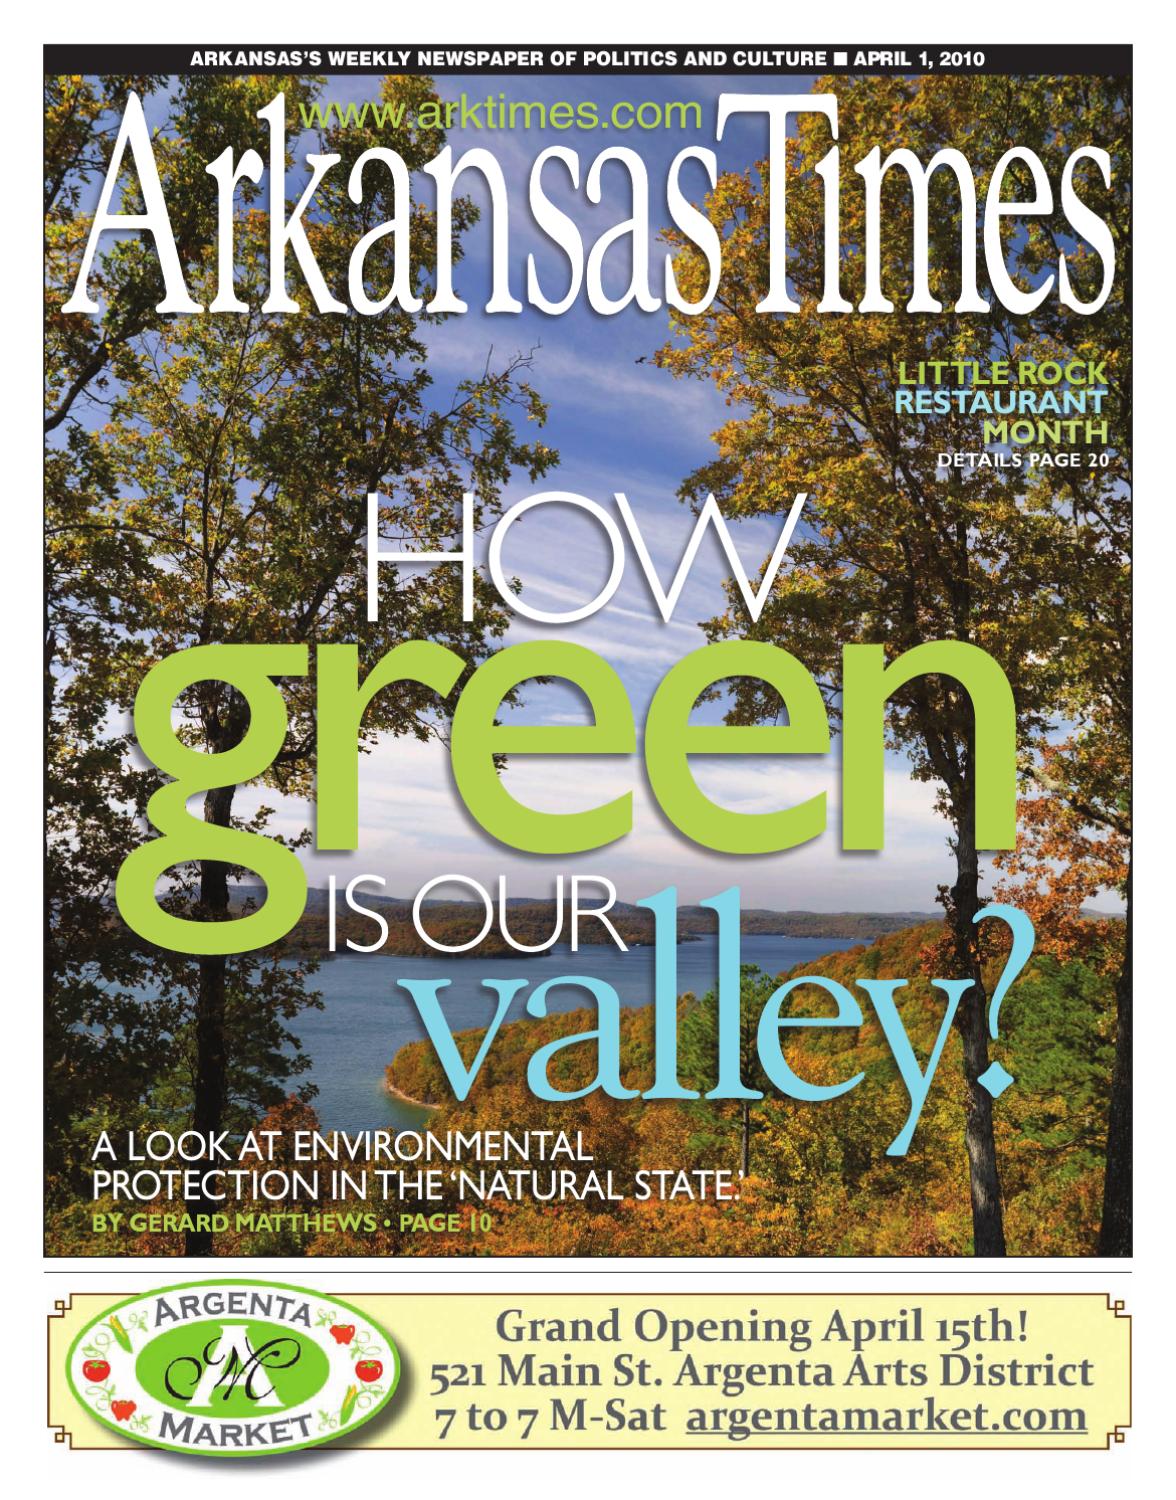 Central Arkansas Fireplace Beautiful Arkansas Times by Arkansas Times issuu